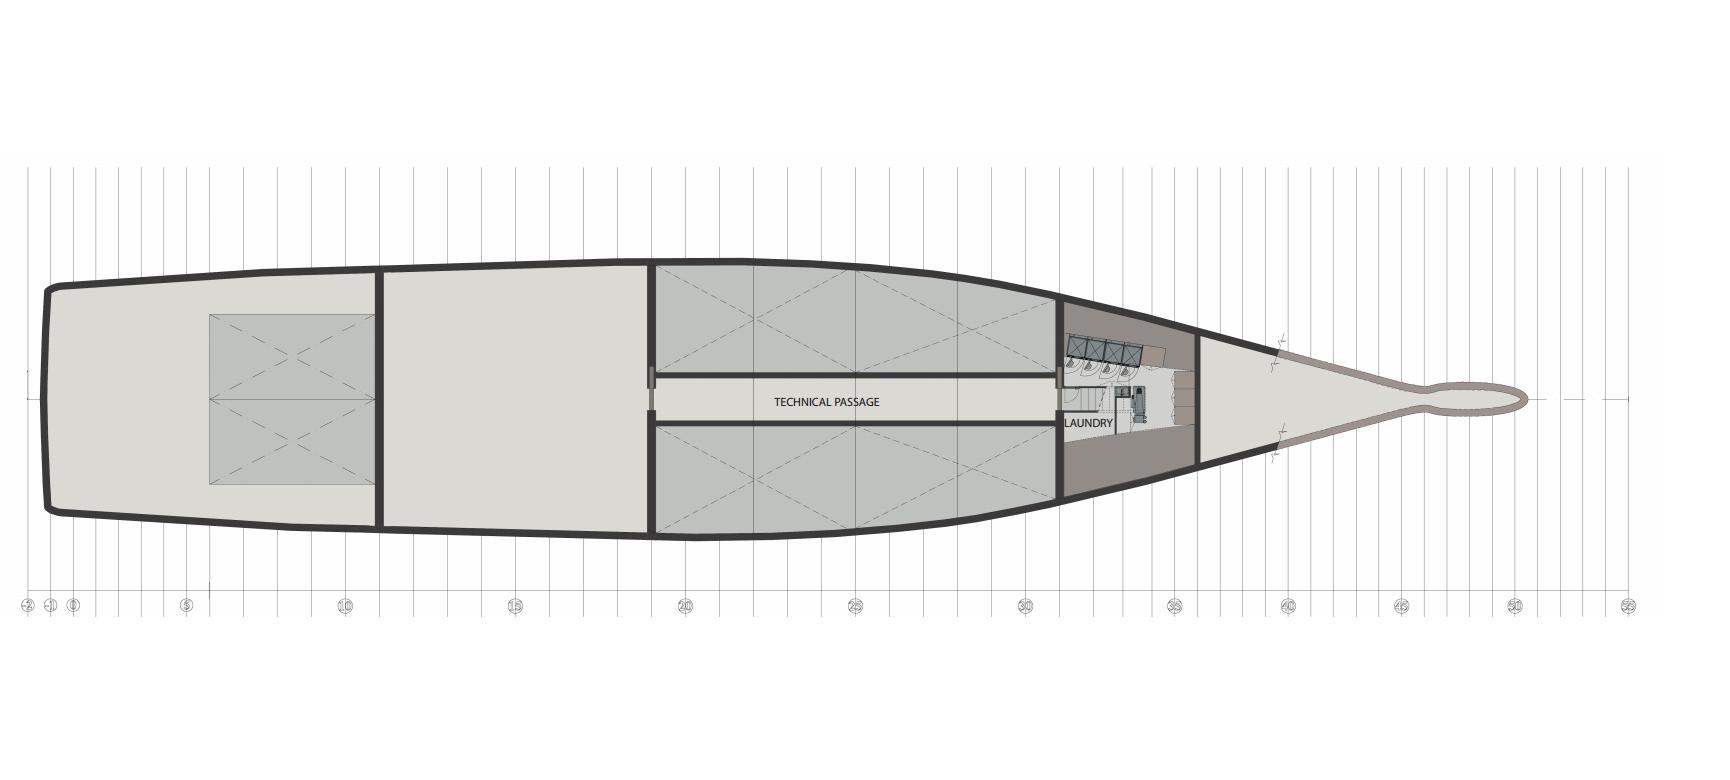 56+sub+lower+deck-yacht-general+arrangement-architect-carignani-design-concept-luxury-boat-motor